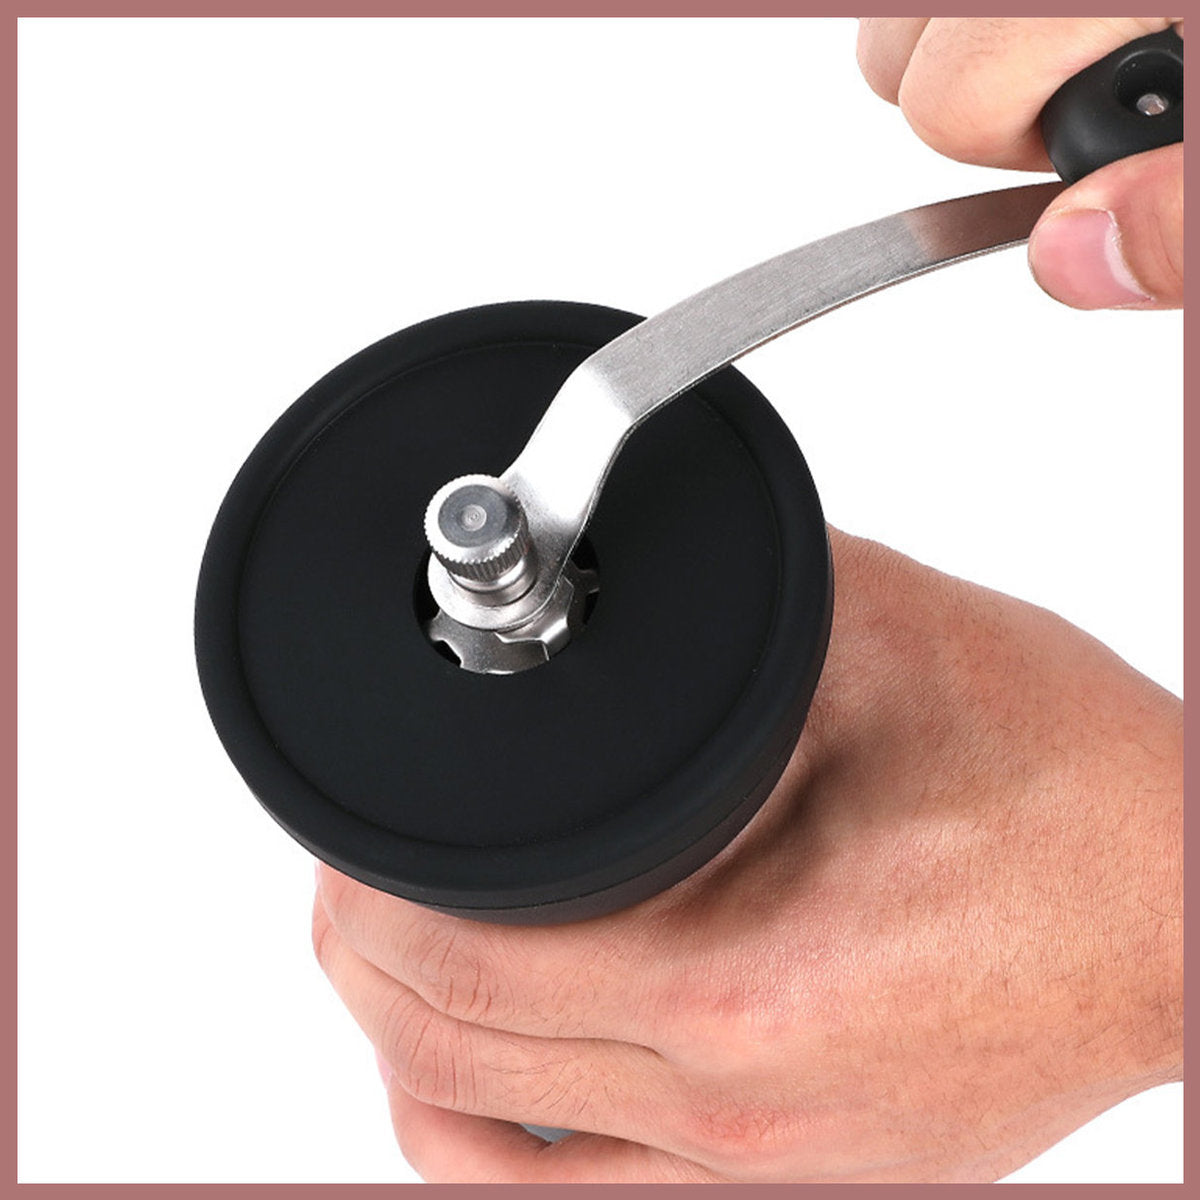 Portable hand ground coffee bean grinder coffee powder manual coffee grinder with glass storage bottle grinder